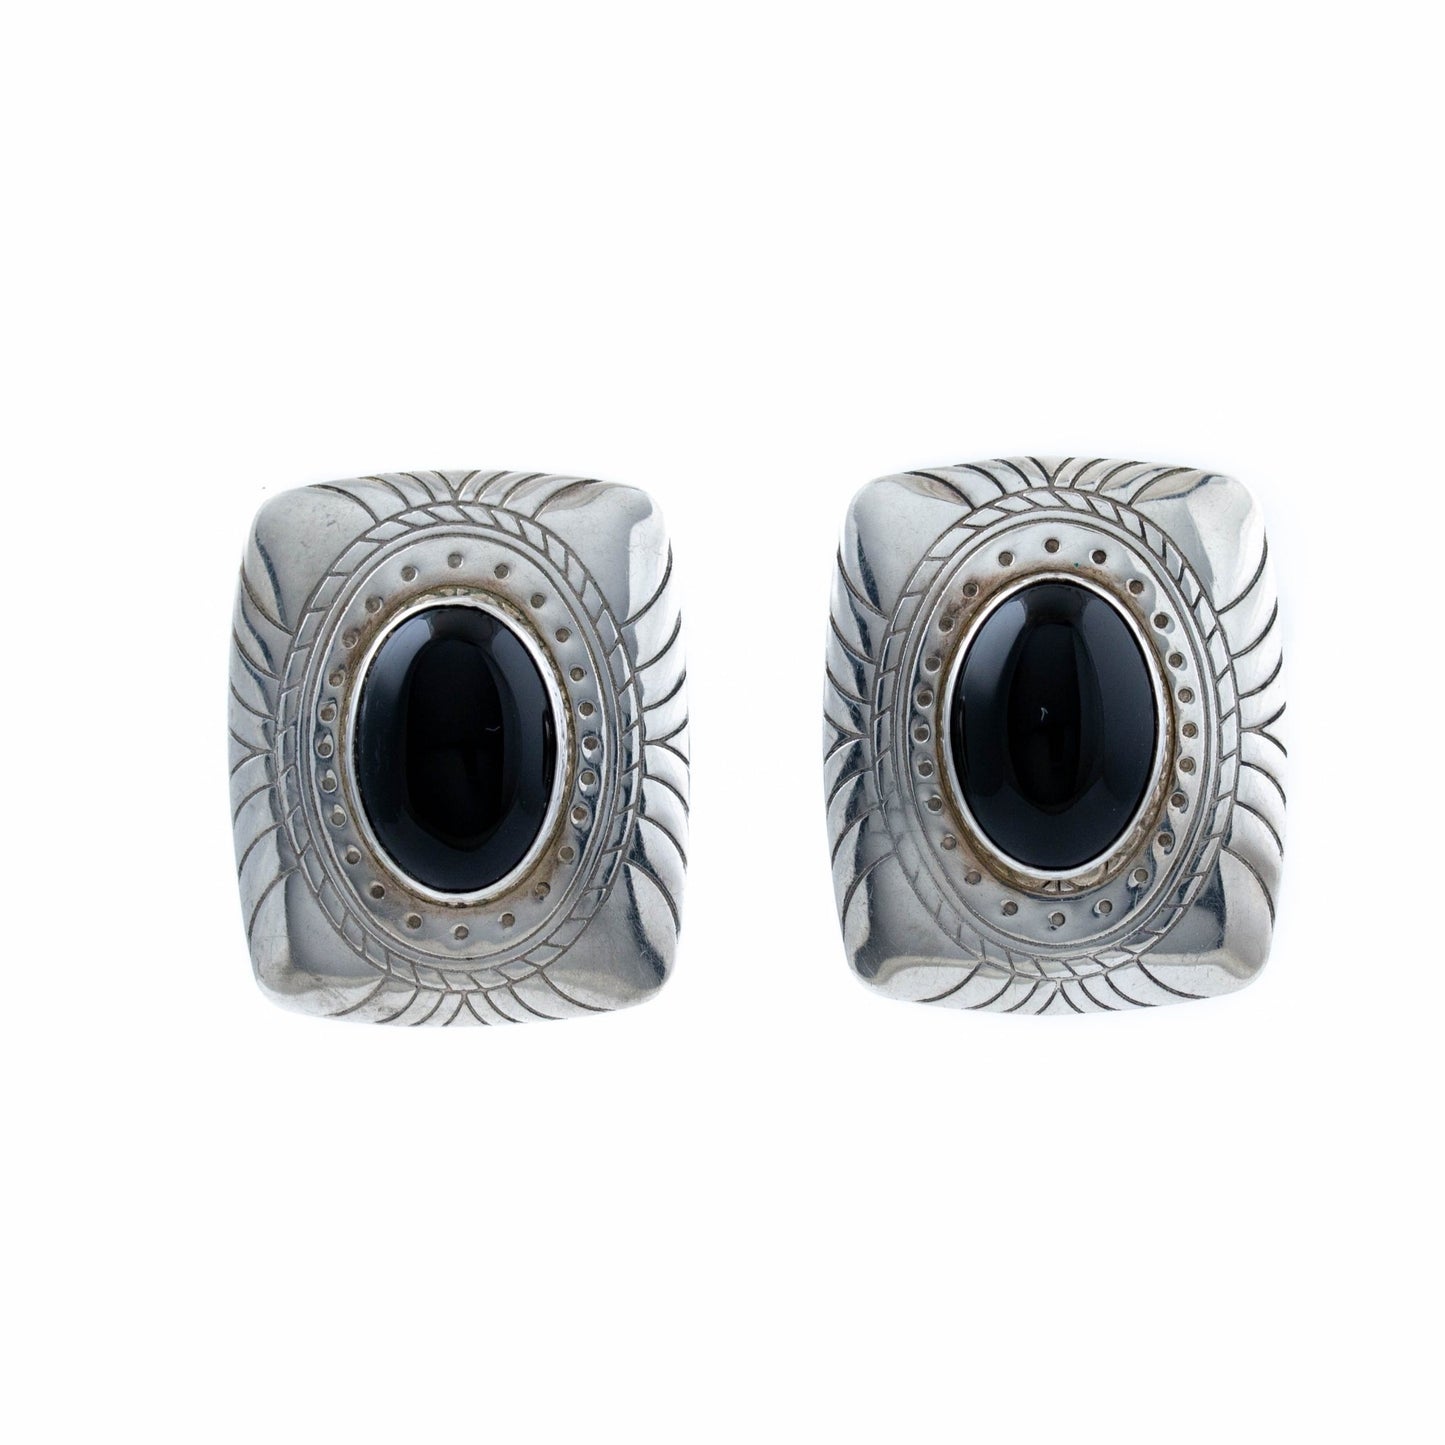 Ornate 1970's Onyx Earrings - Kingdom Jewelry